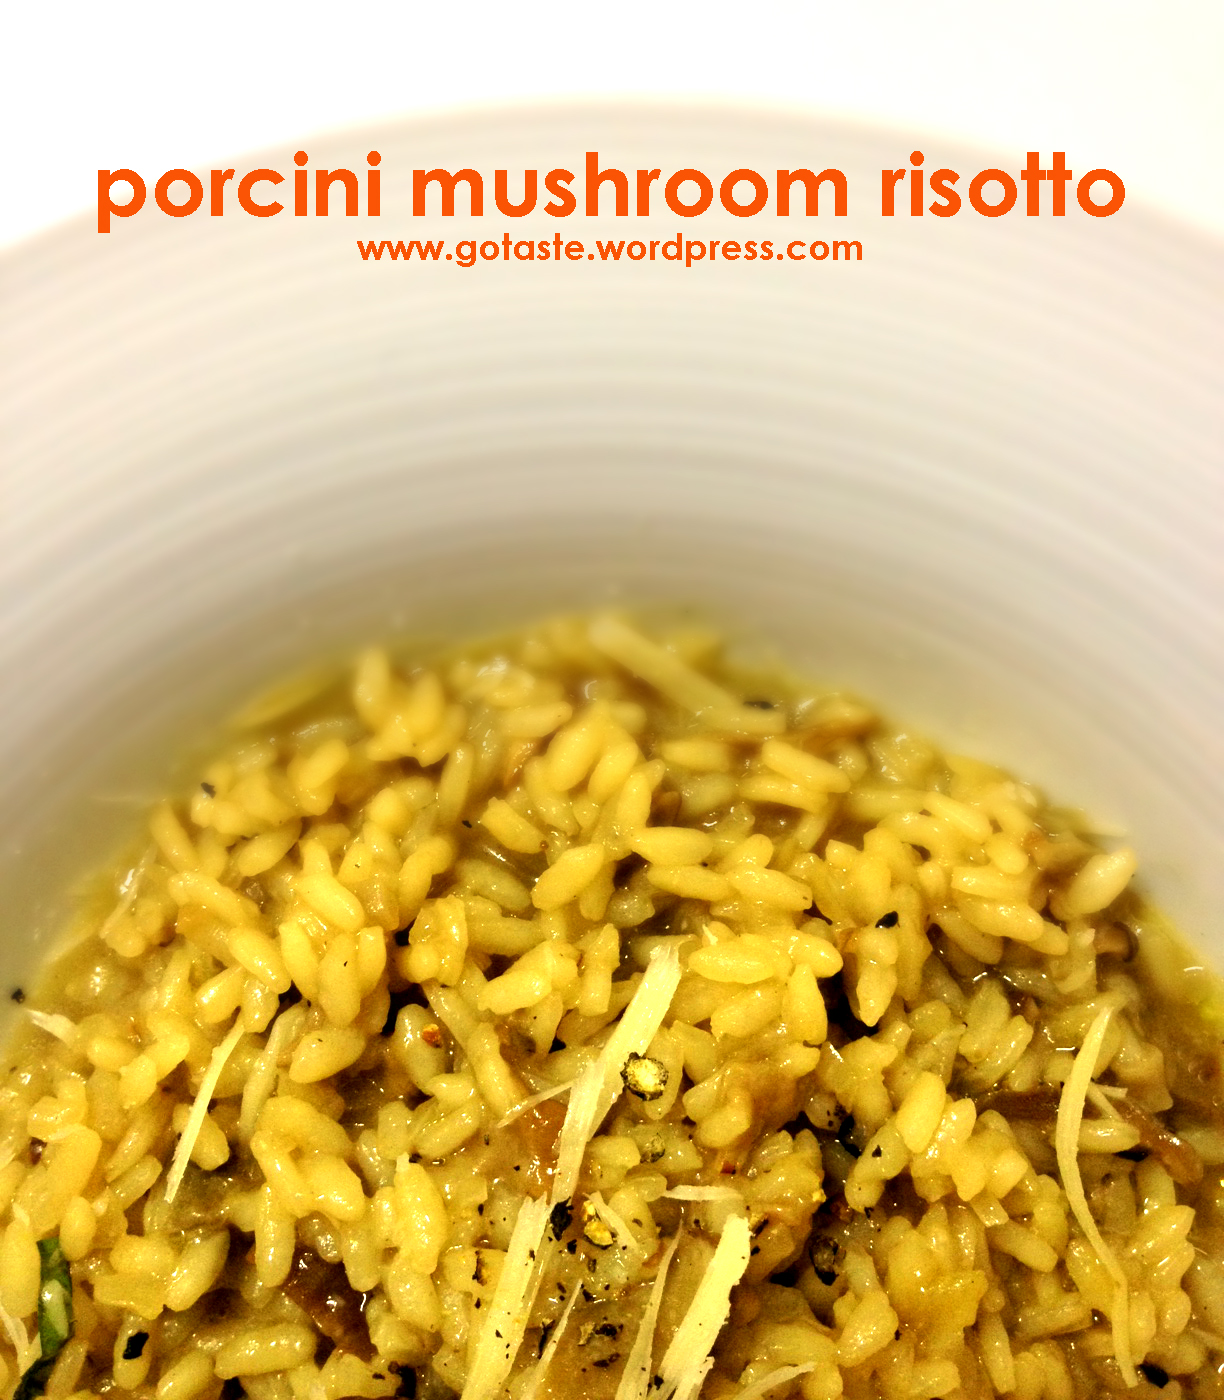 Dried Porcini Mushrooms Risotto Recipes